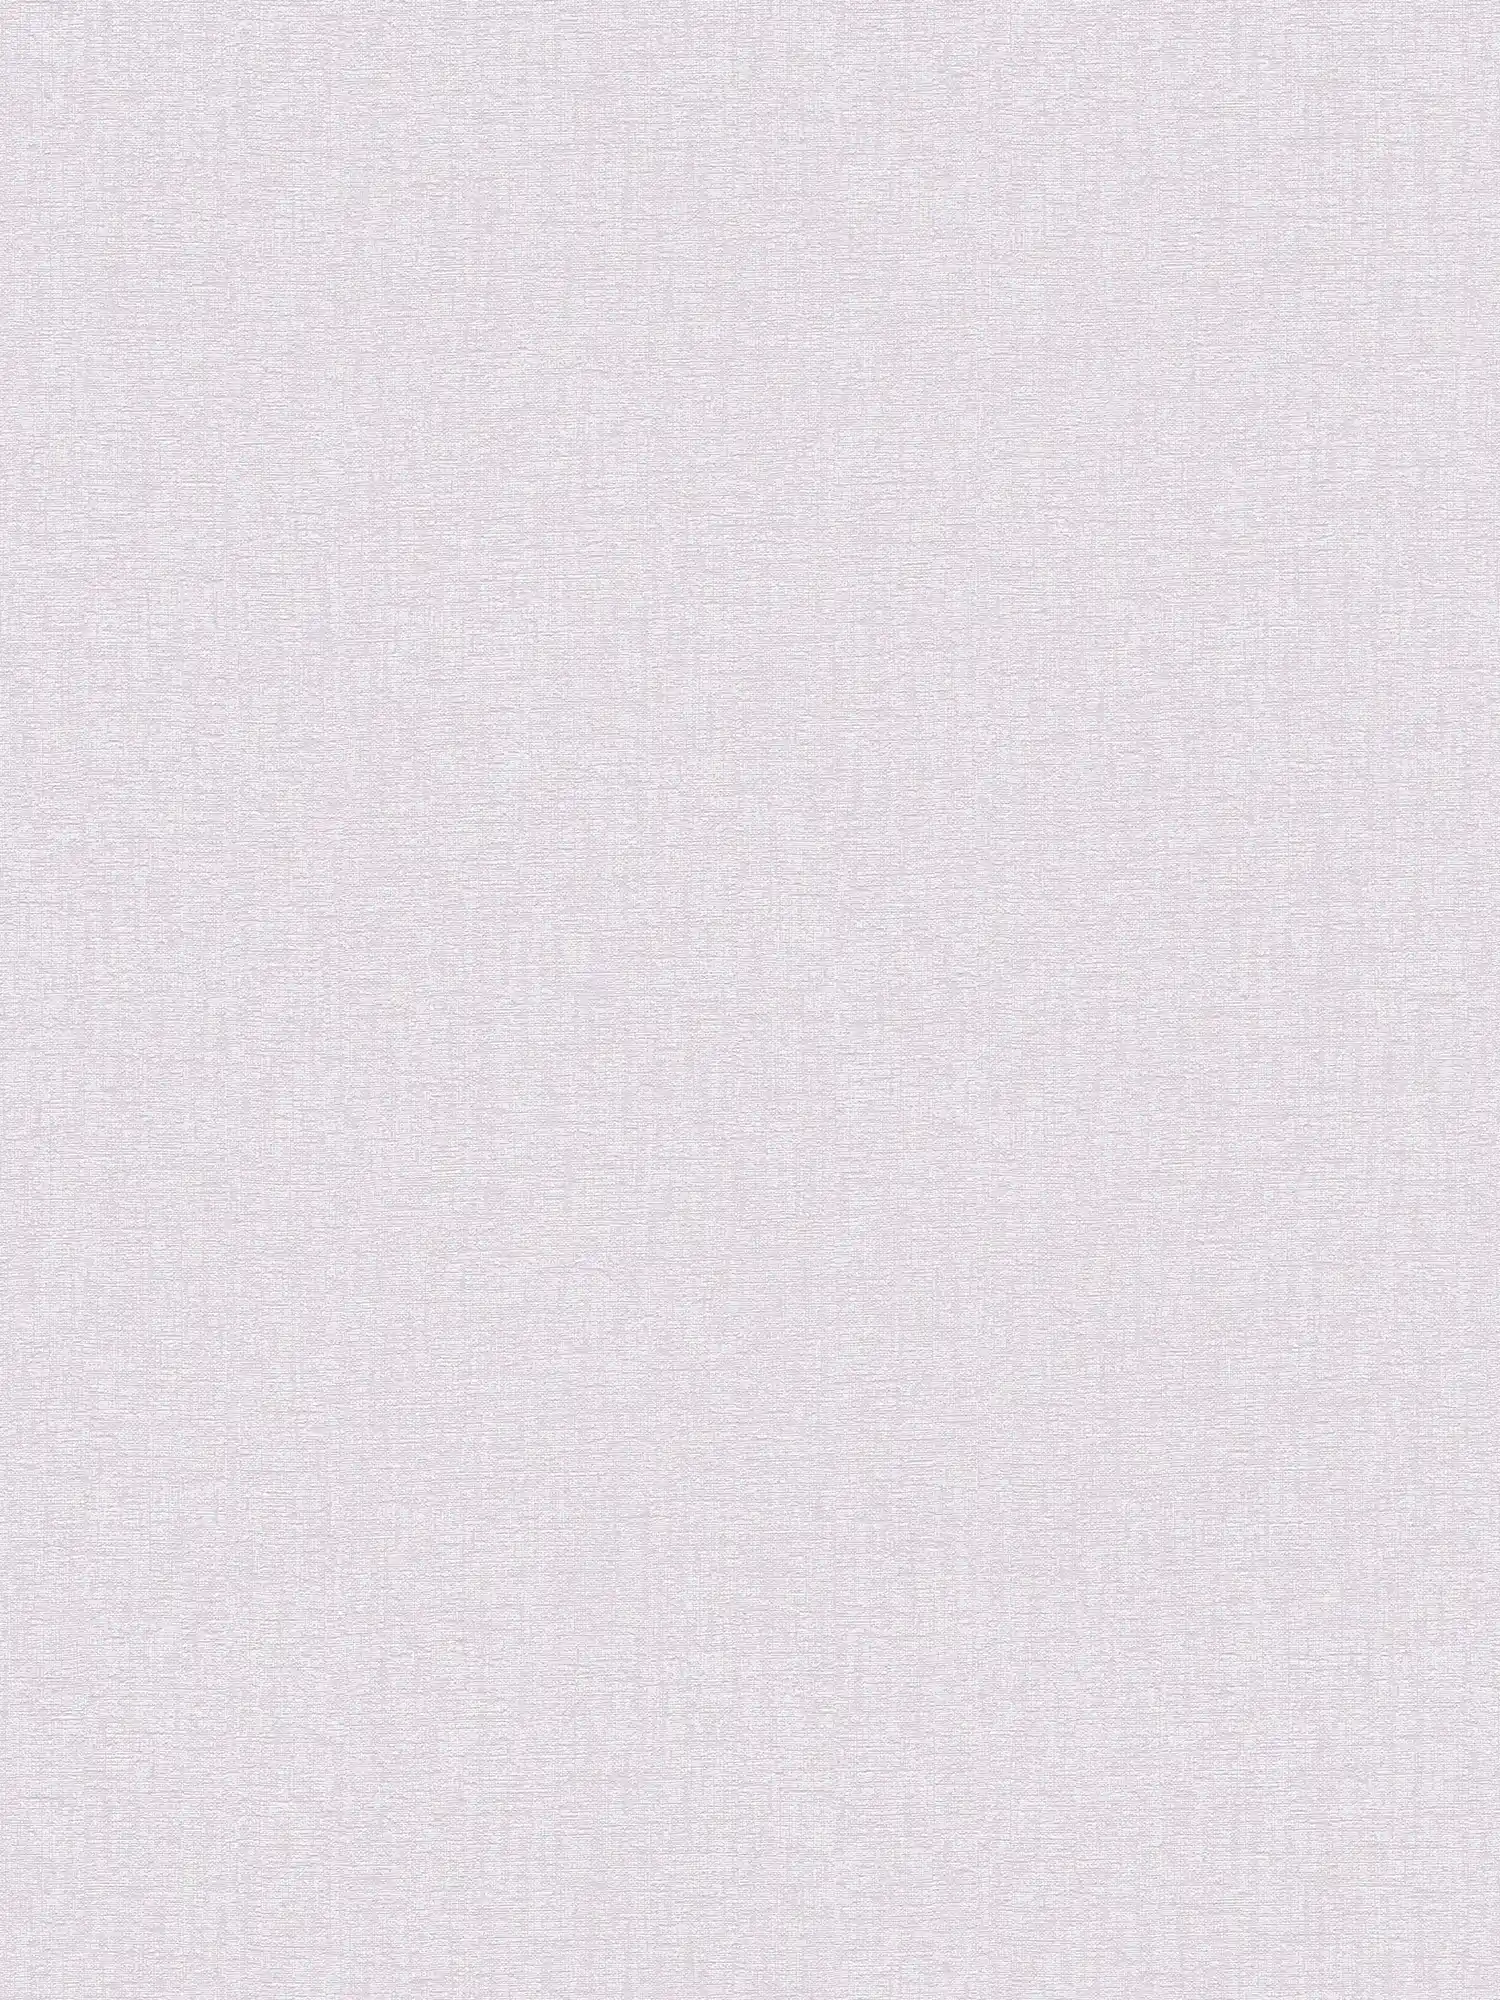 Papel pintado unitario de aspecto mate ligeramente texturado - Violeta
